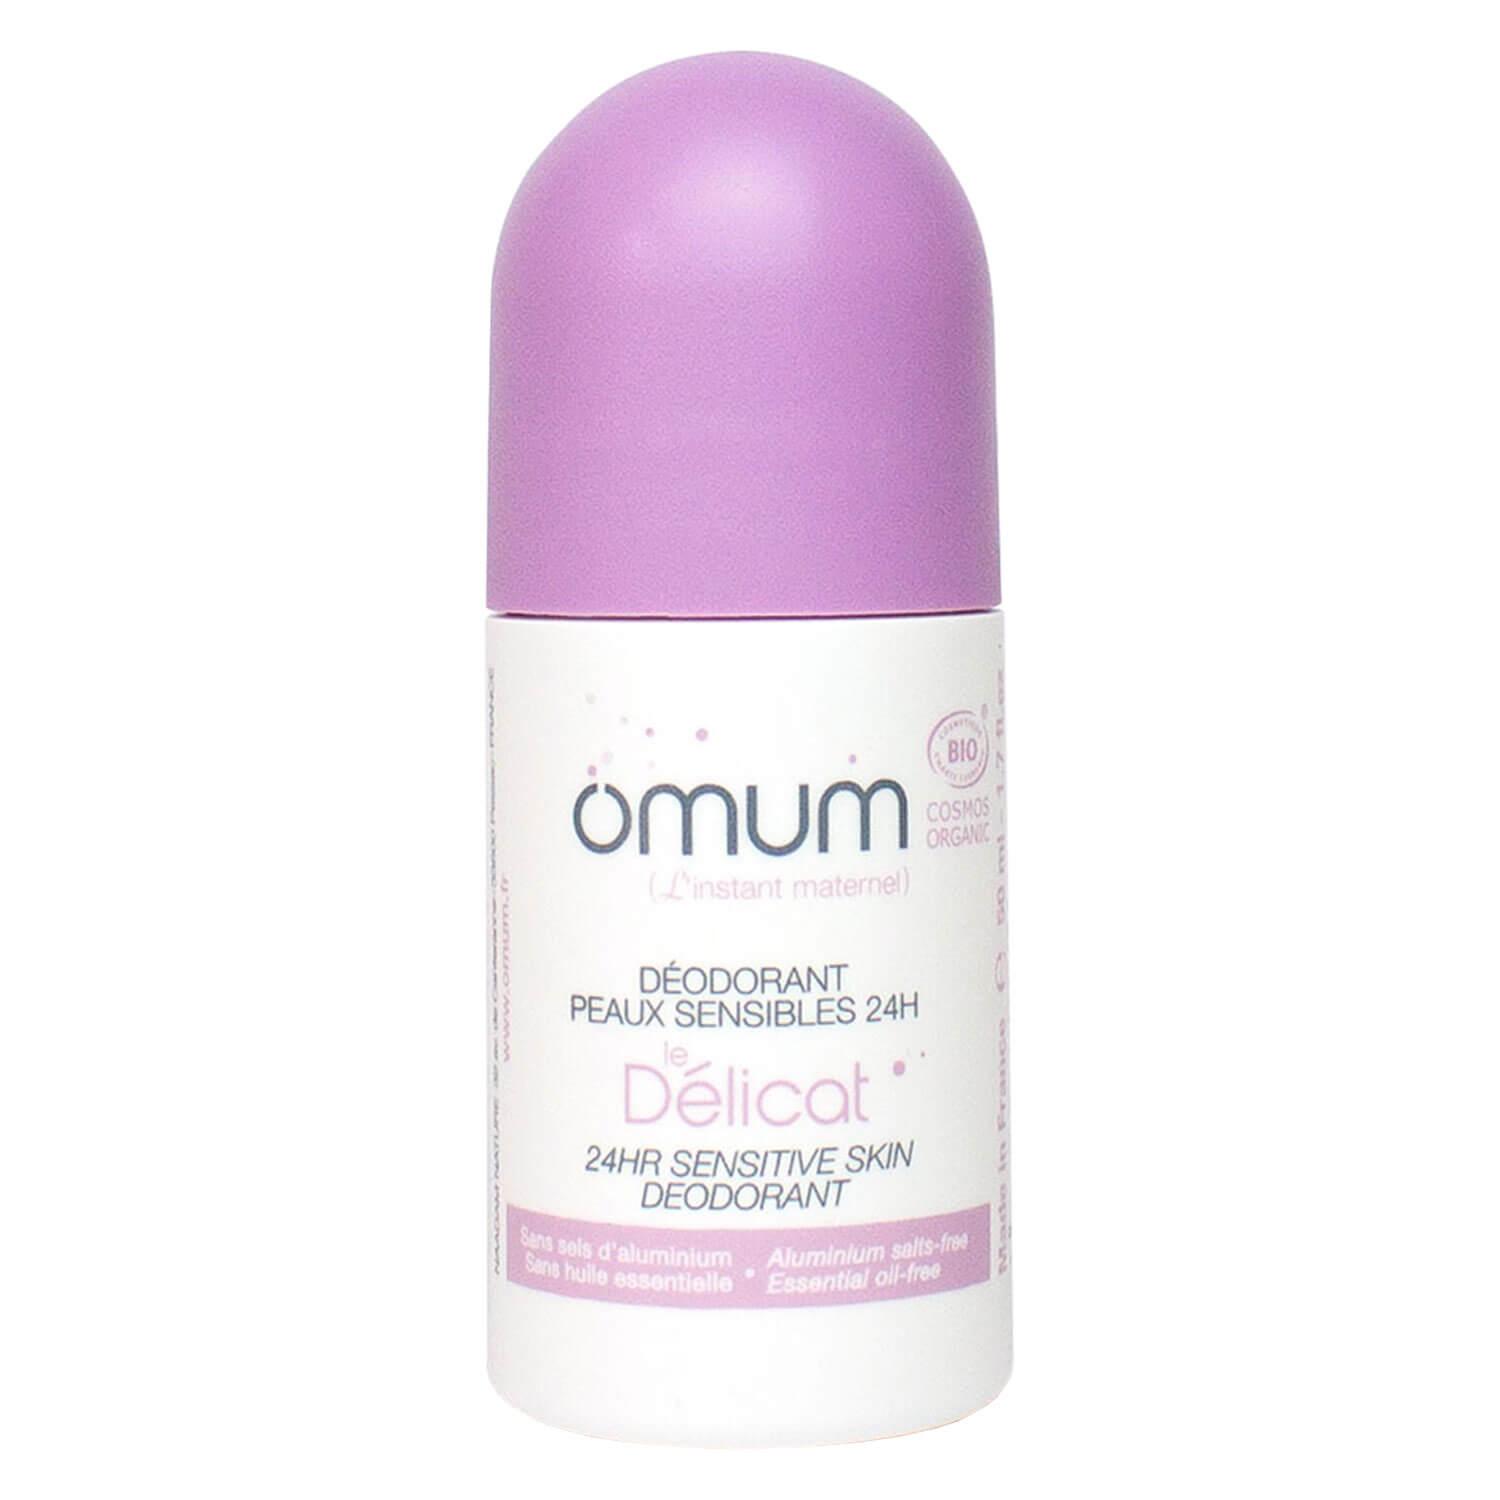 omum - Le Délicat 24HR Sensitive Skin Deodorant